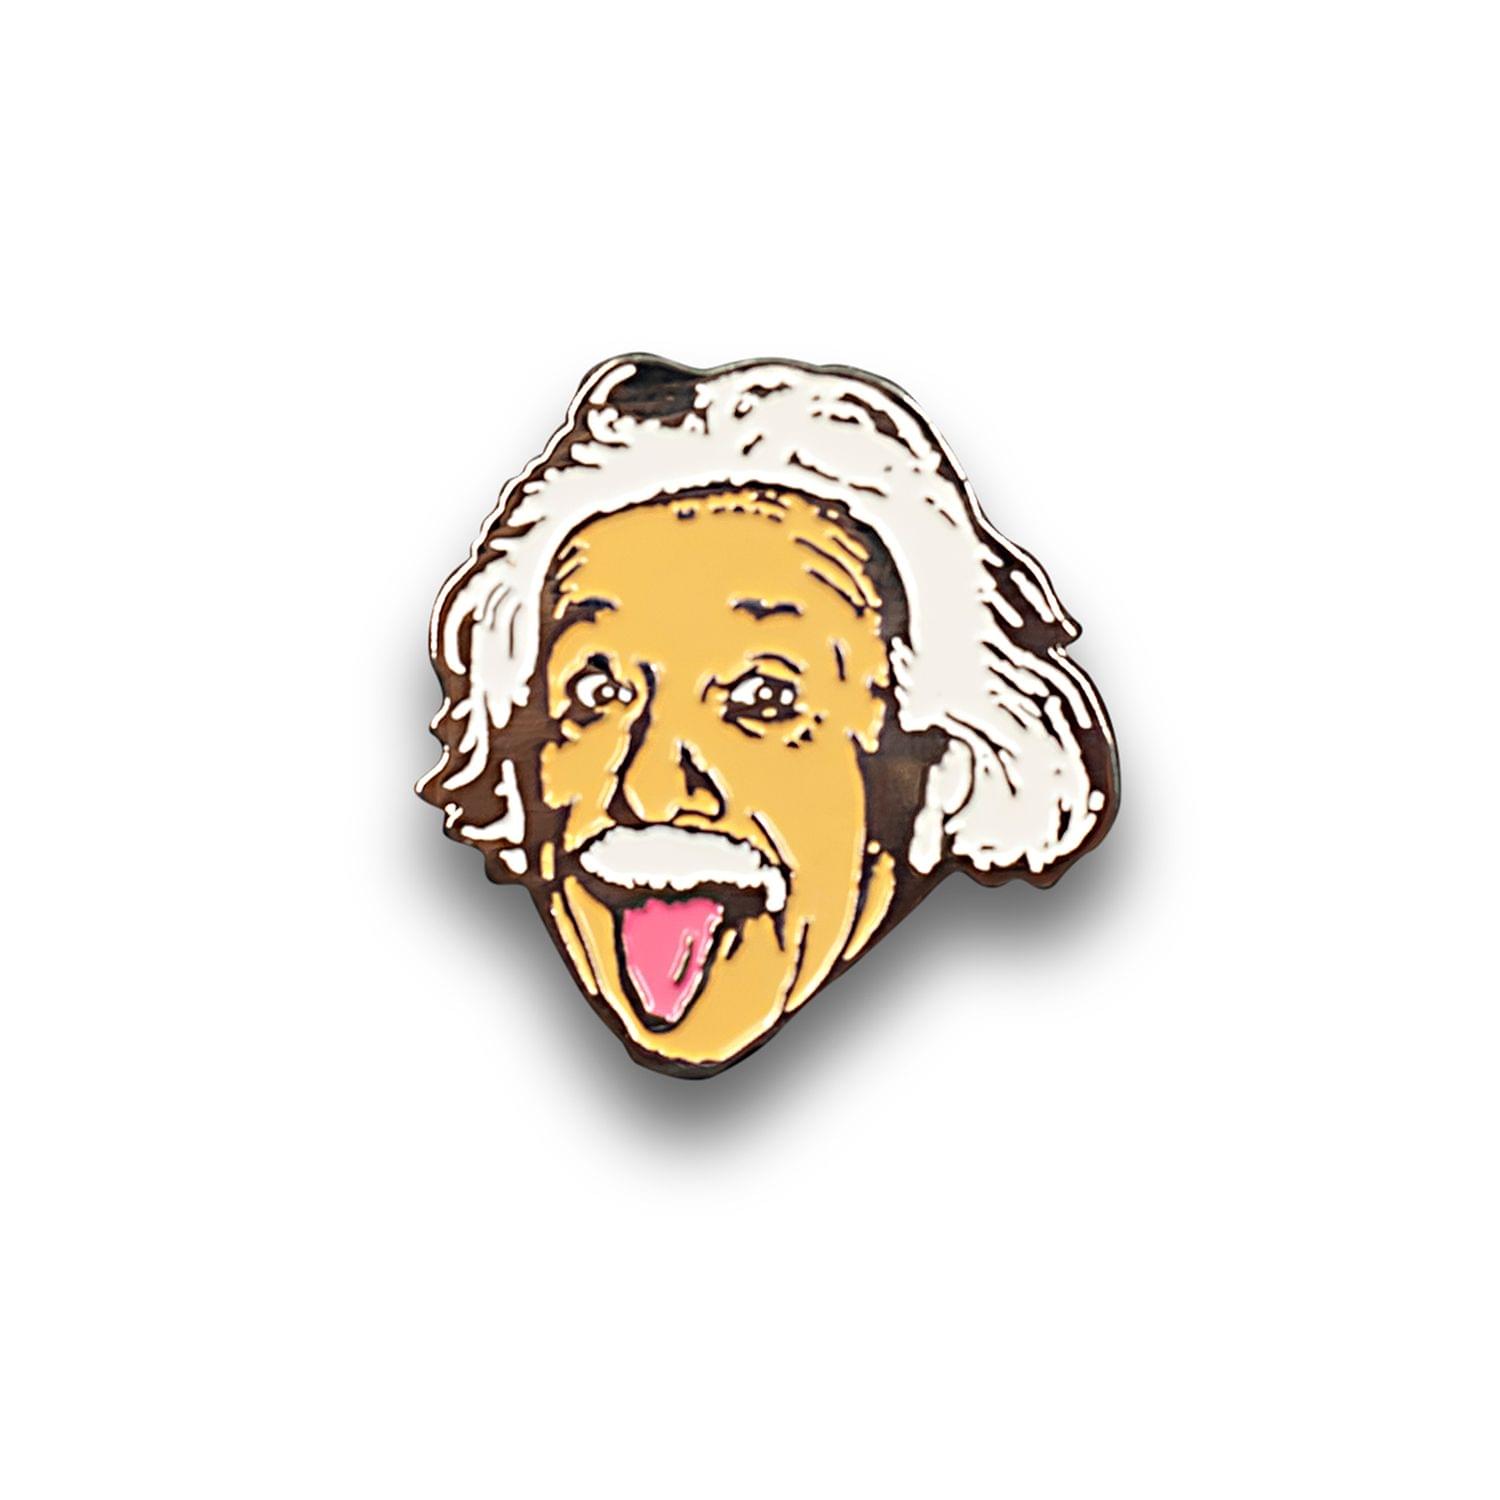 Albert Einstein Tongue Out Enamel Pin | Official Einstein Collectible Poster Pin